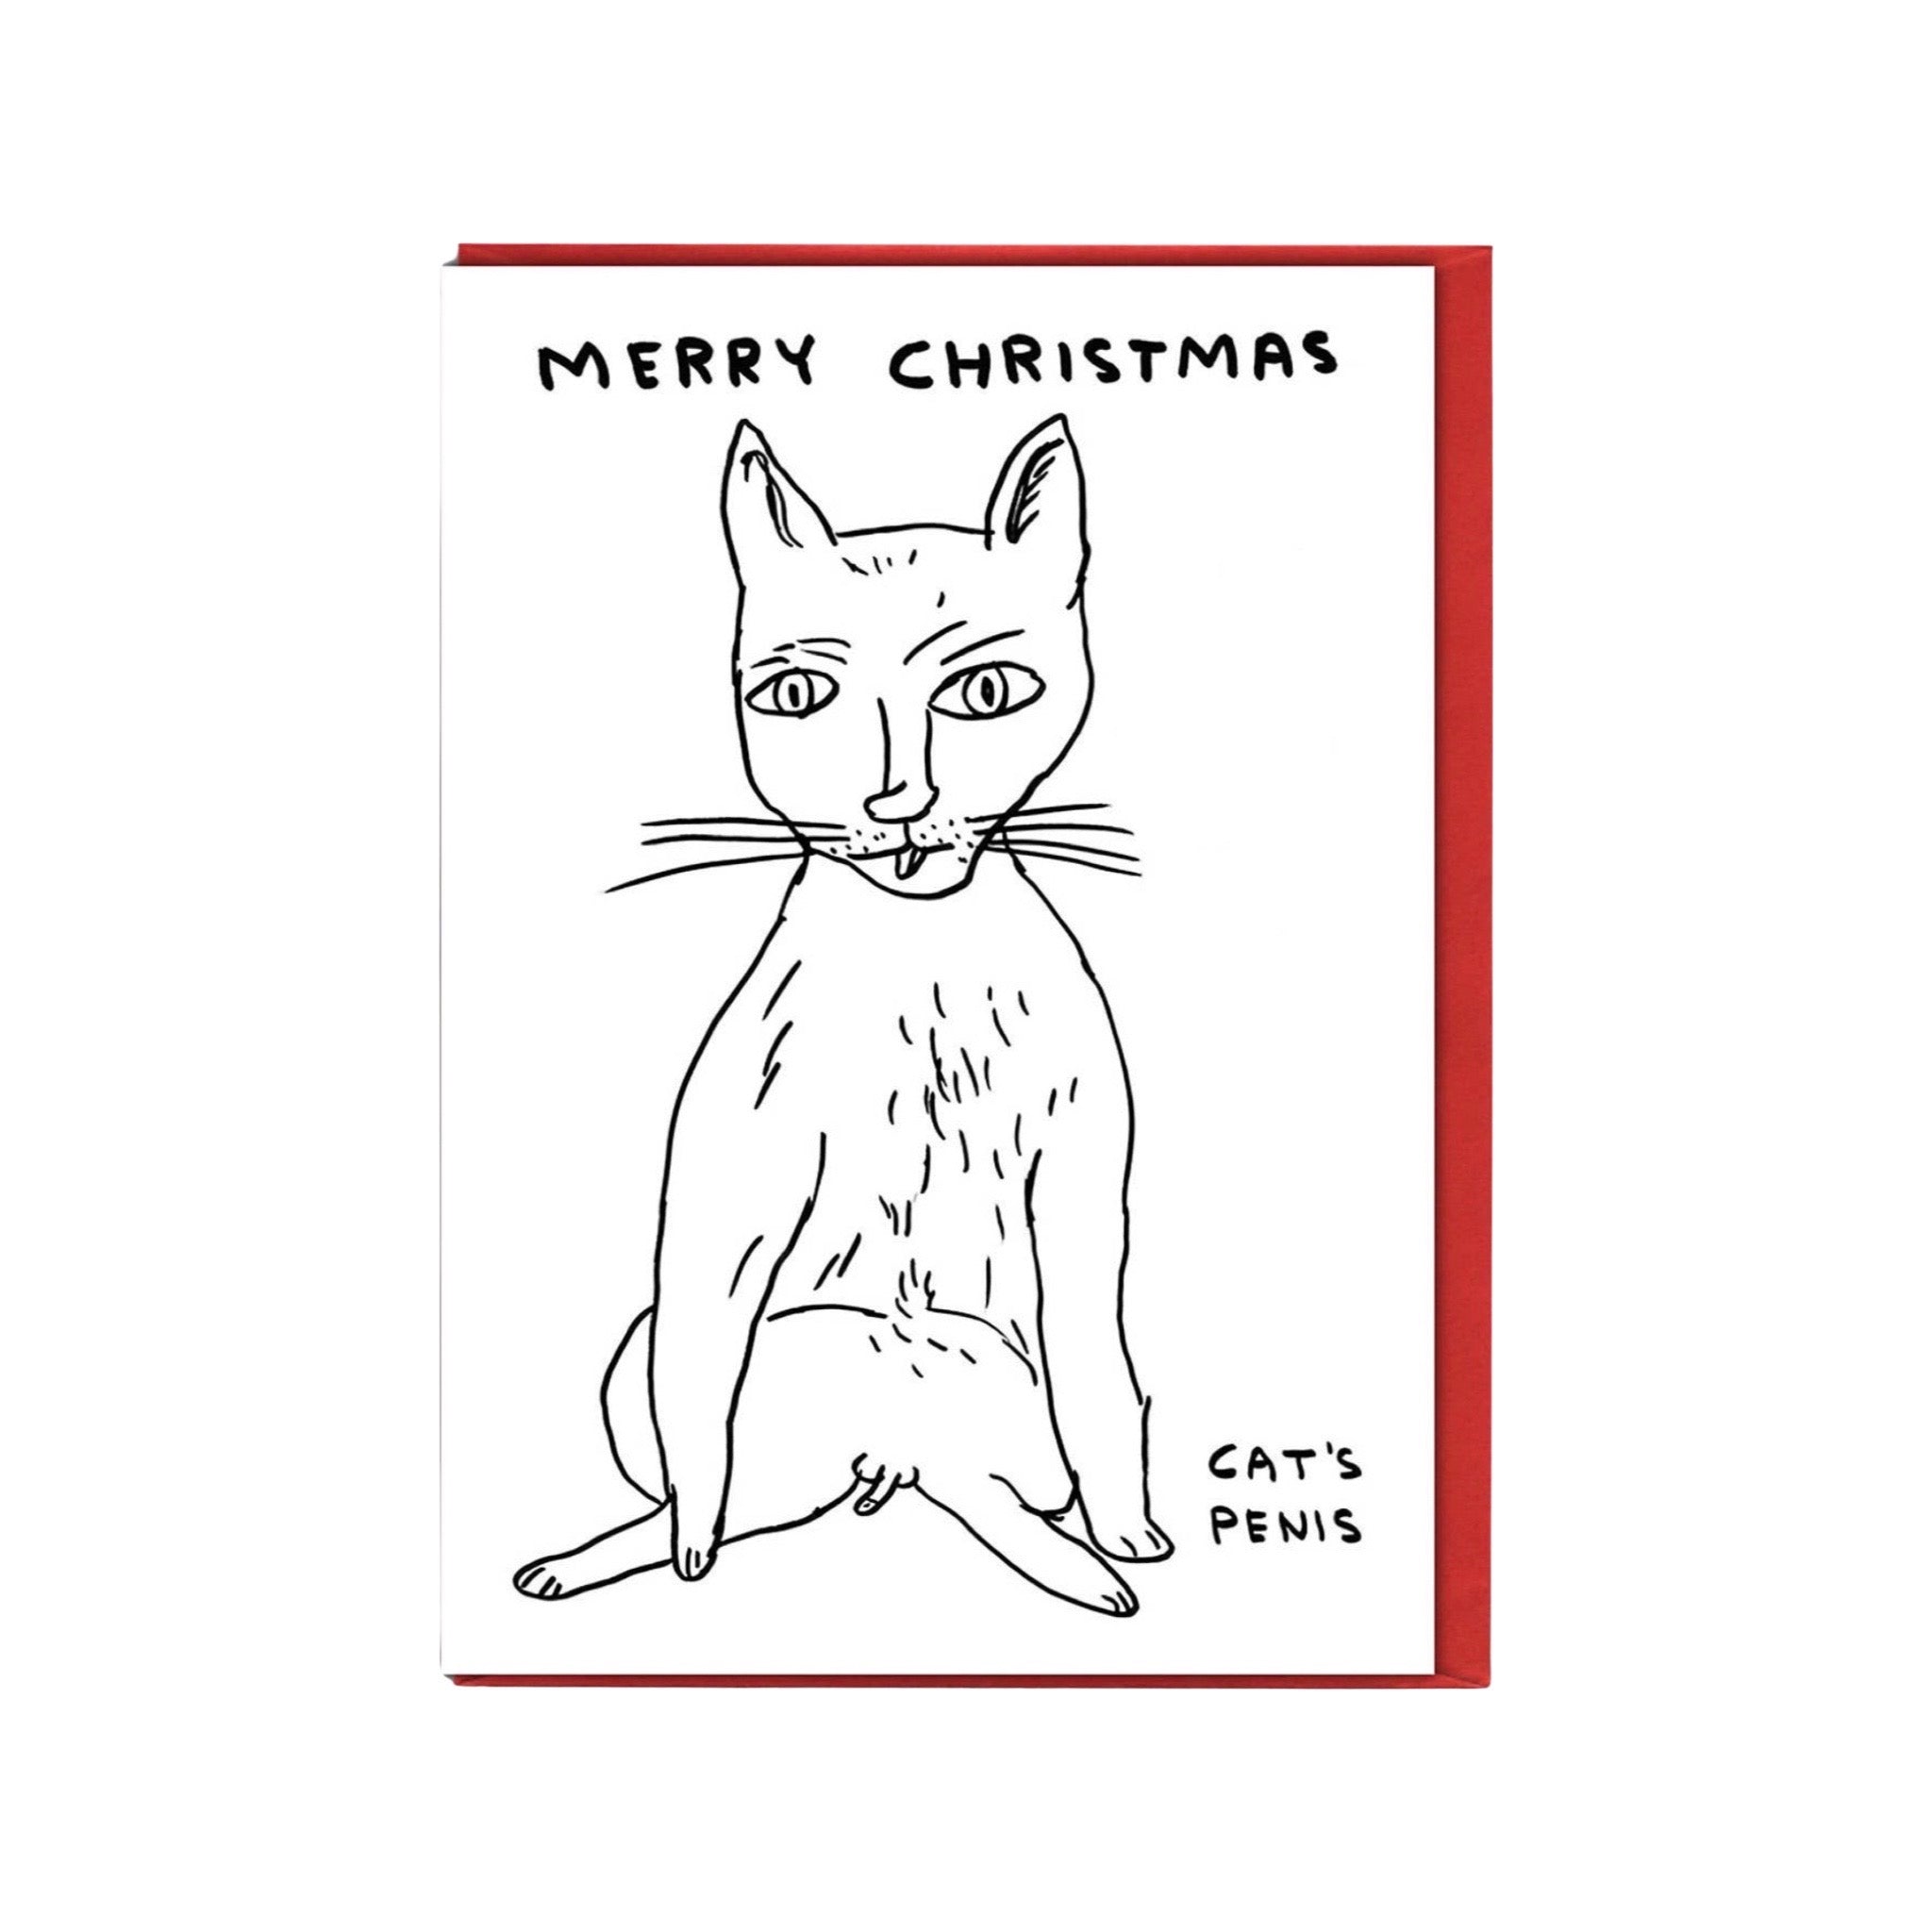 Cat's Penis Christmas Card